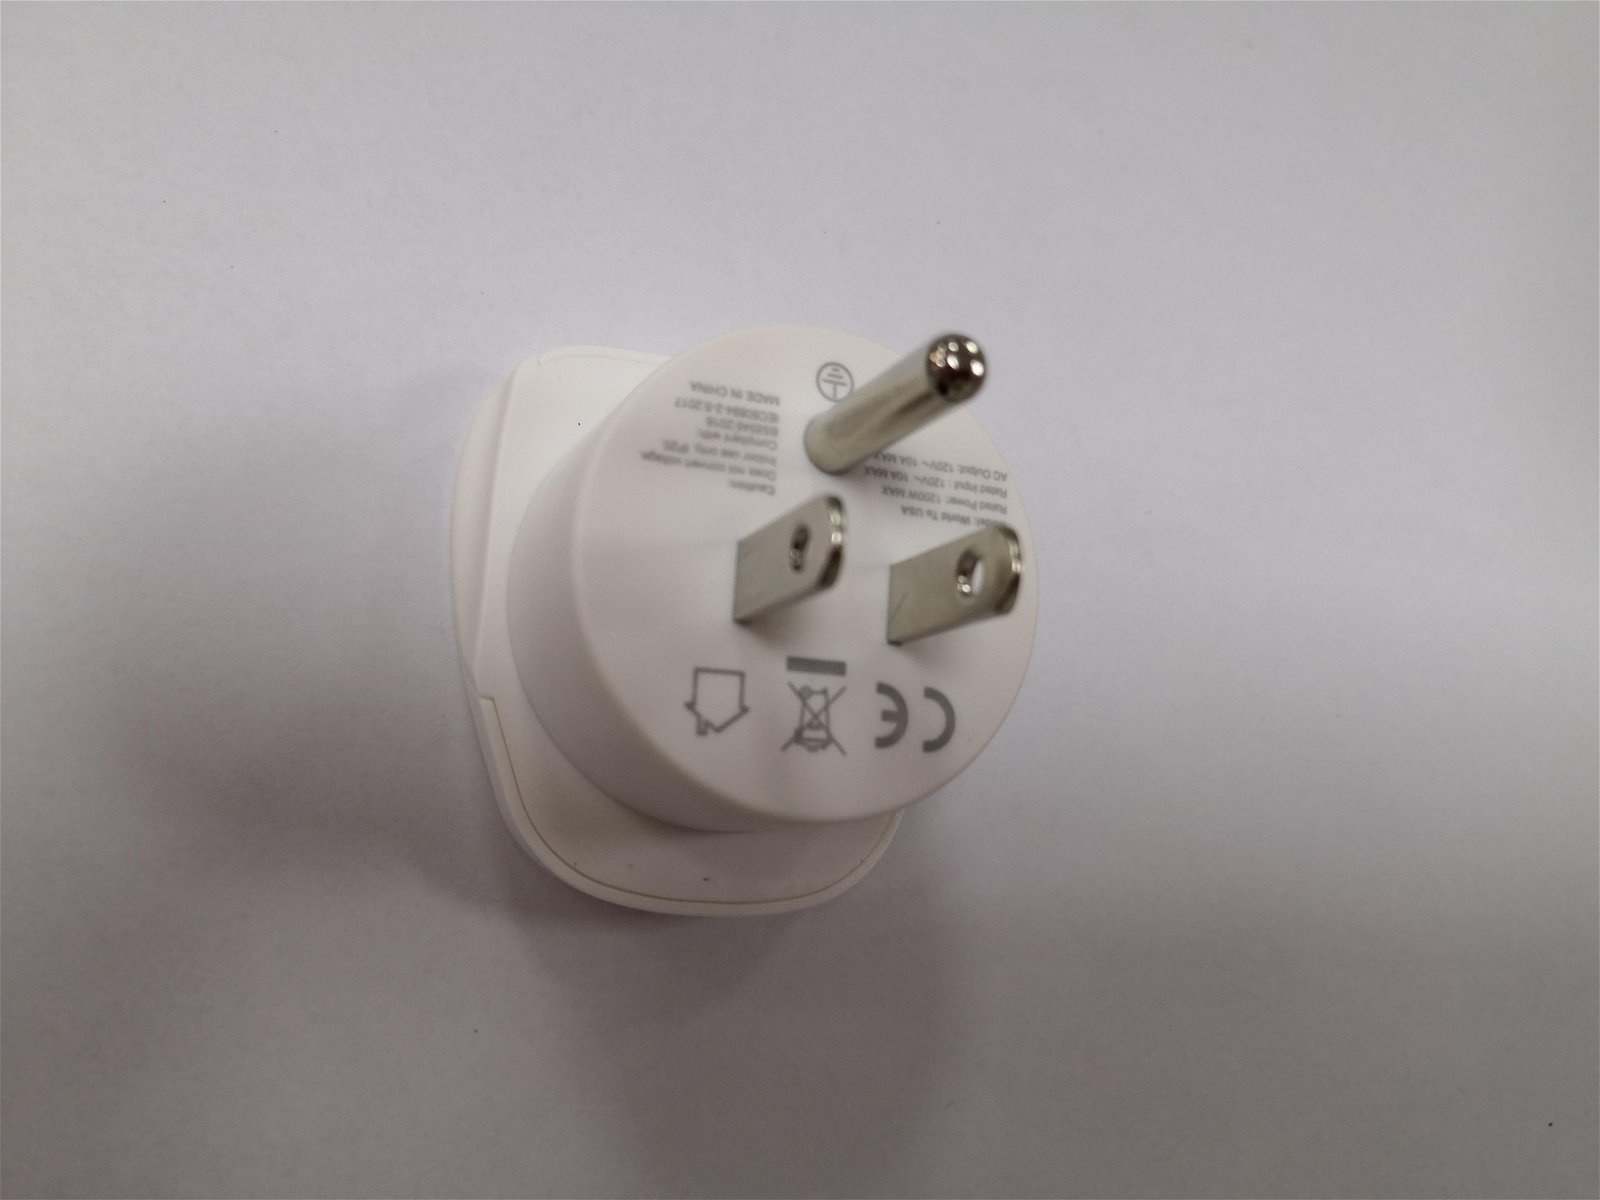 Universal 3 pin UK to US AU EU Plug Travel Adapter Power Plug BS8546 adapter